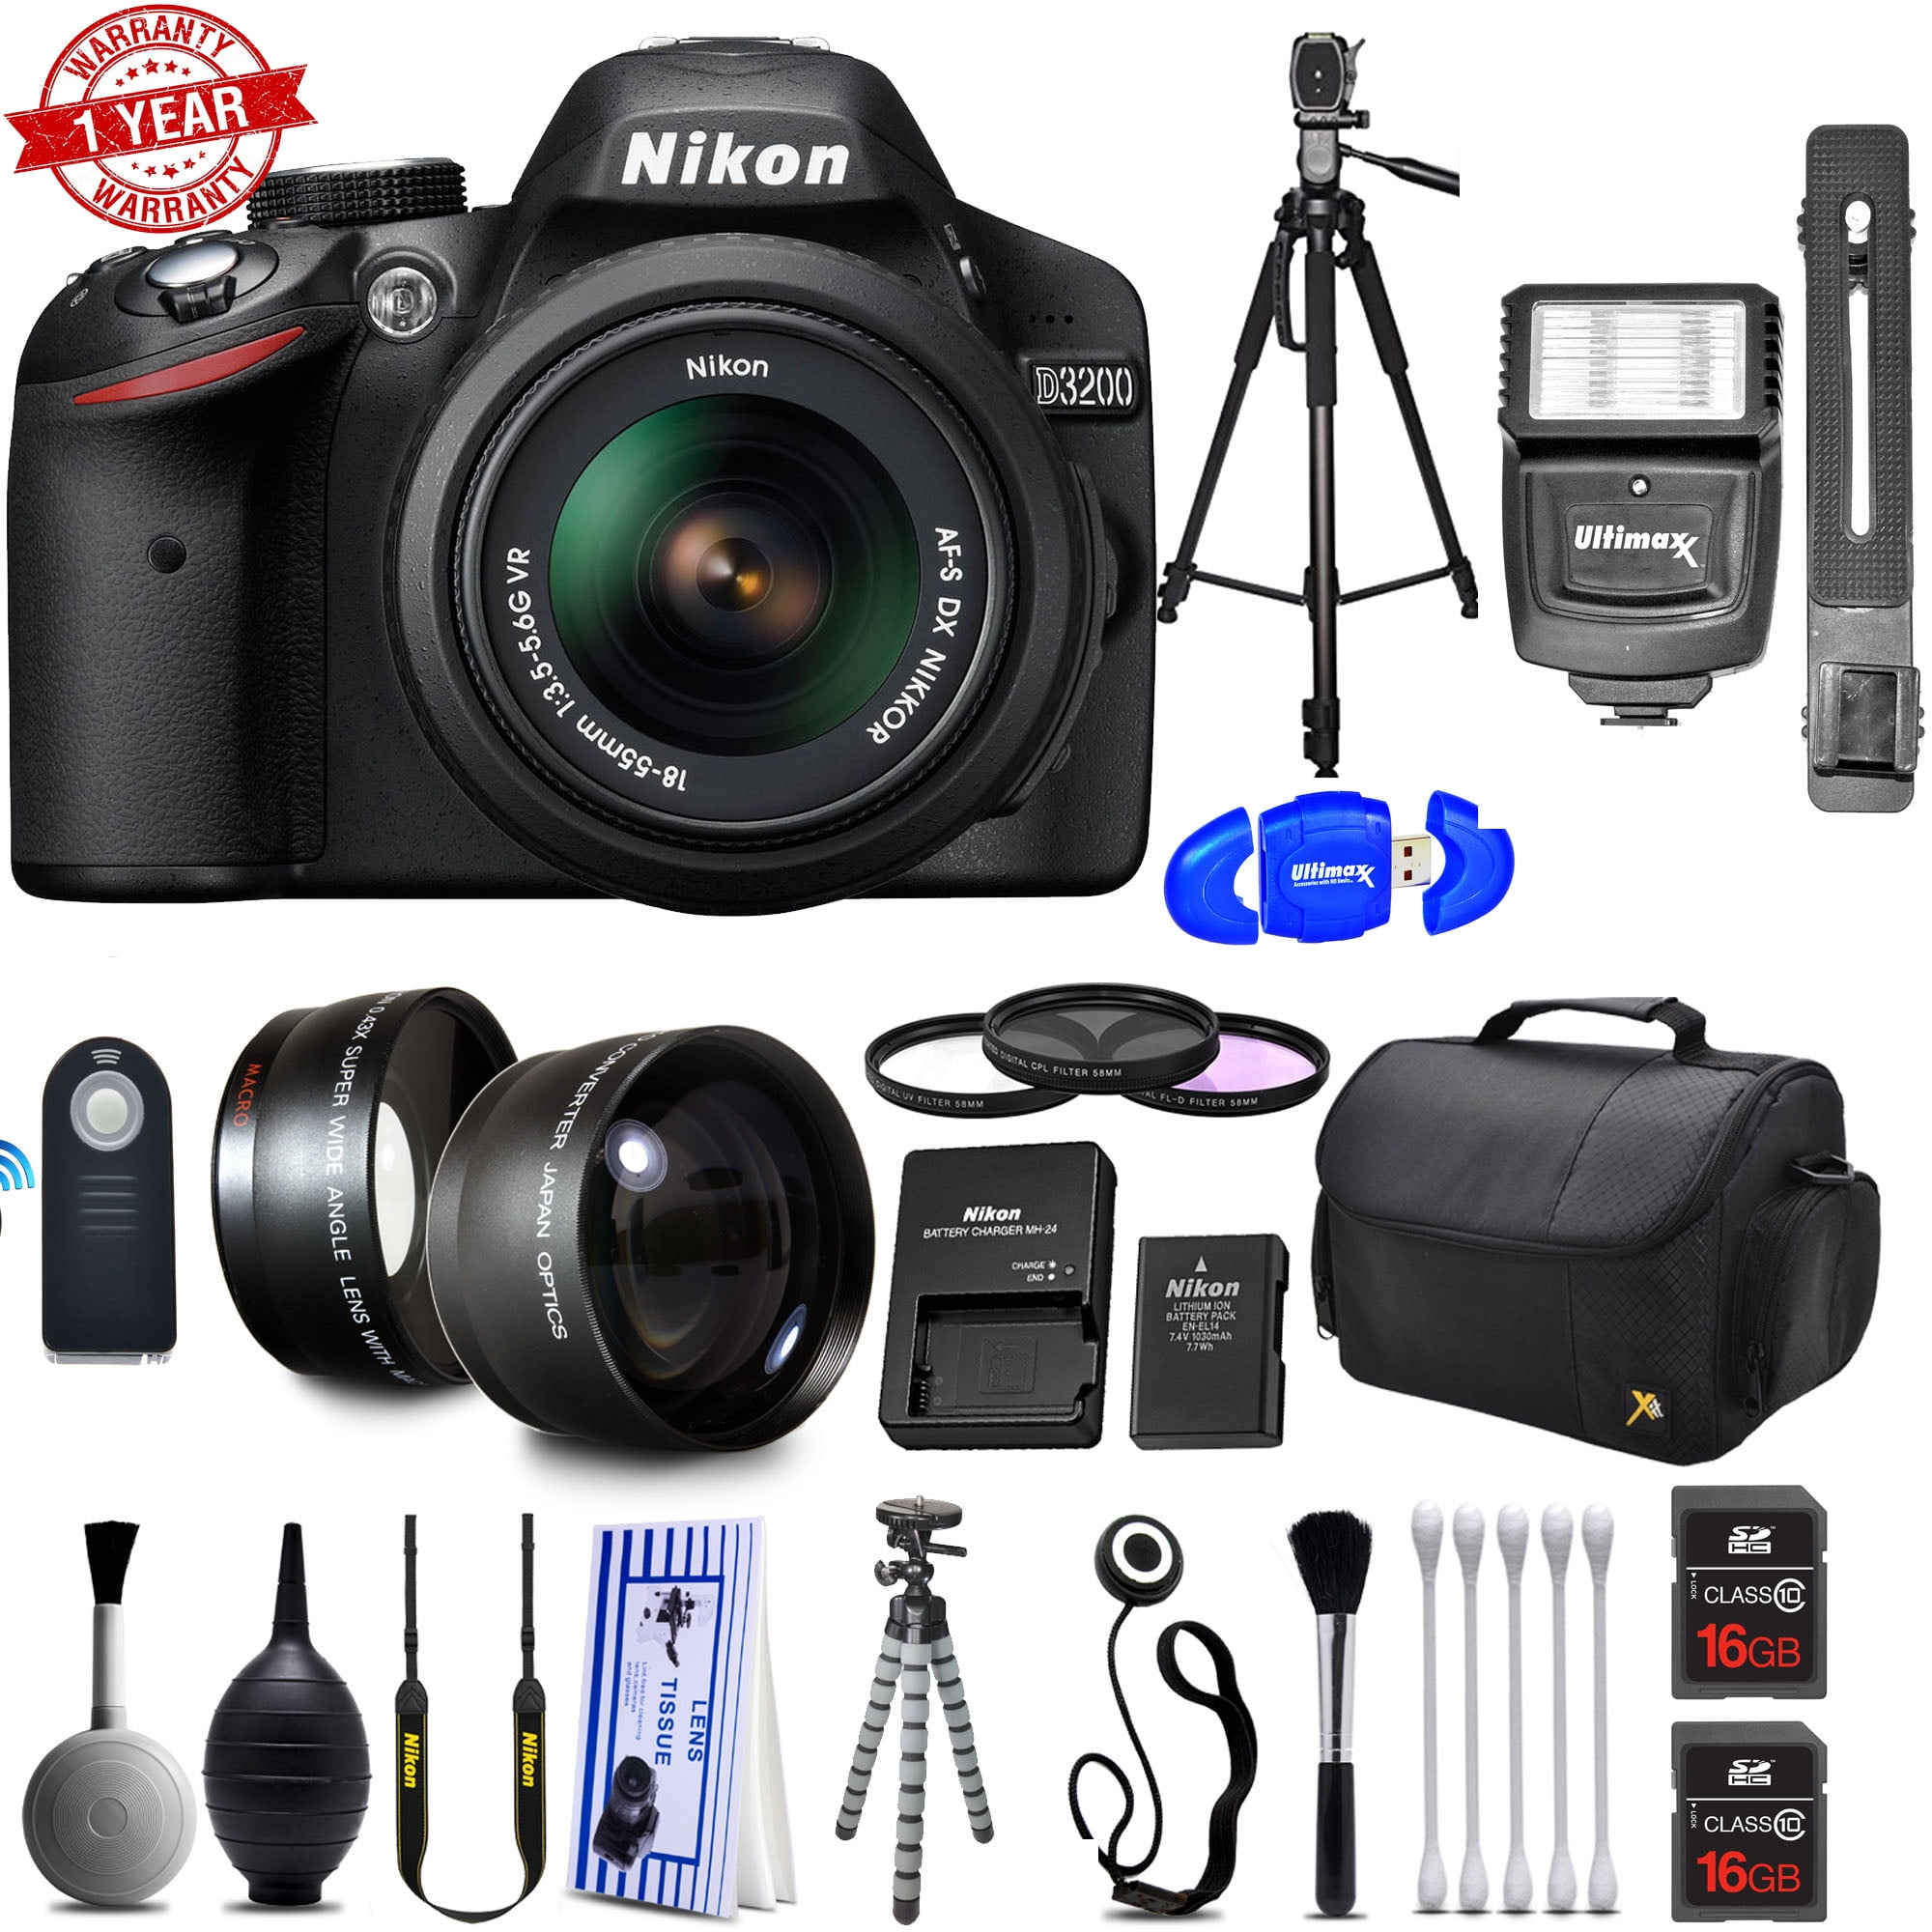 Nikon D3200 Digital SLR Camera with 18-55mm AF-P Lens Kit w/ 32GB MC | Flash | Tripod | Additional Accessories Bundle - Walmart.com